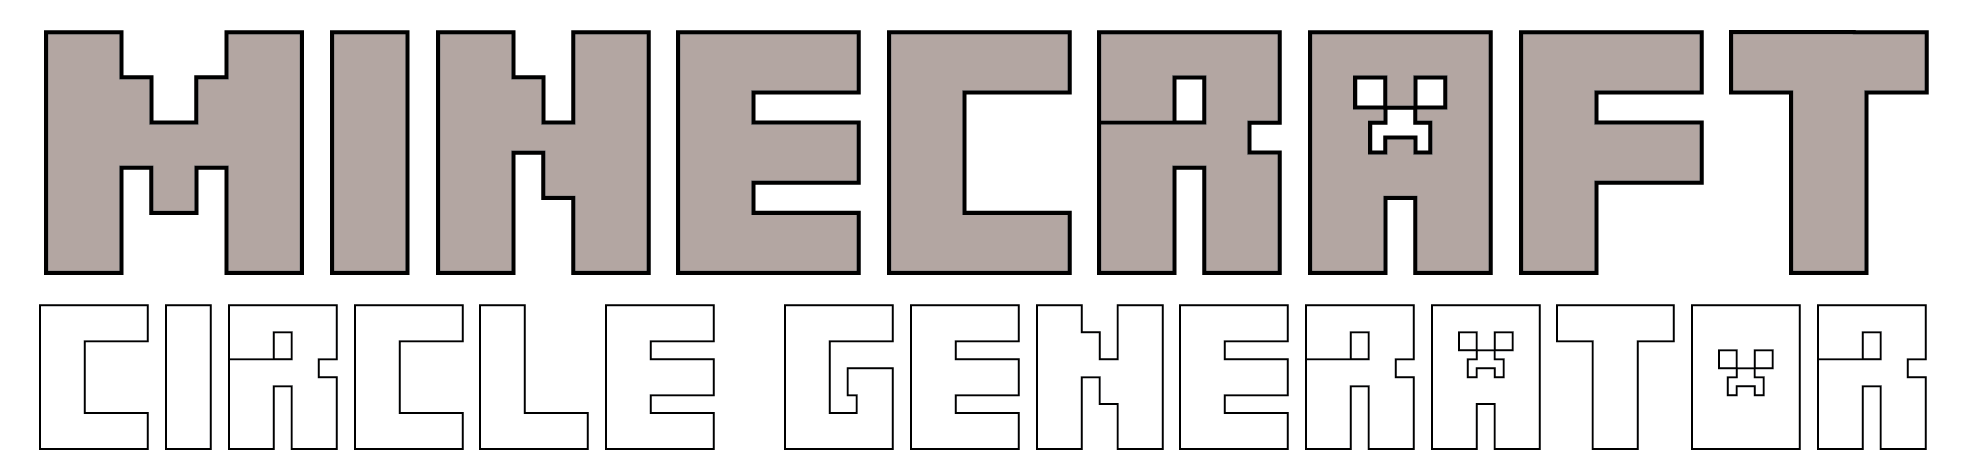 minecraft-circle-generator-logo